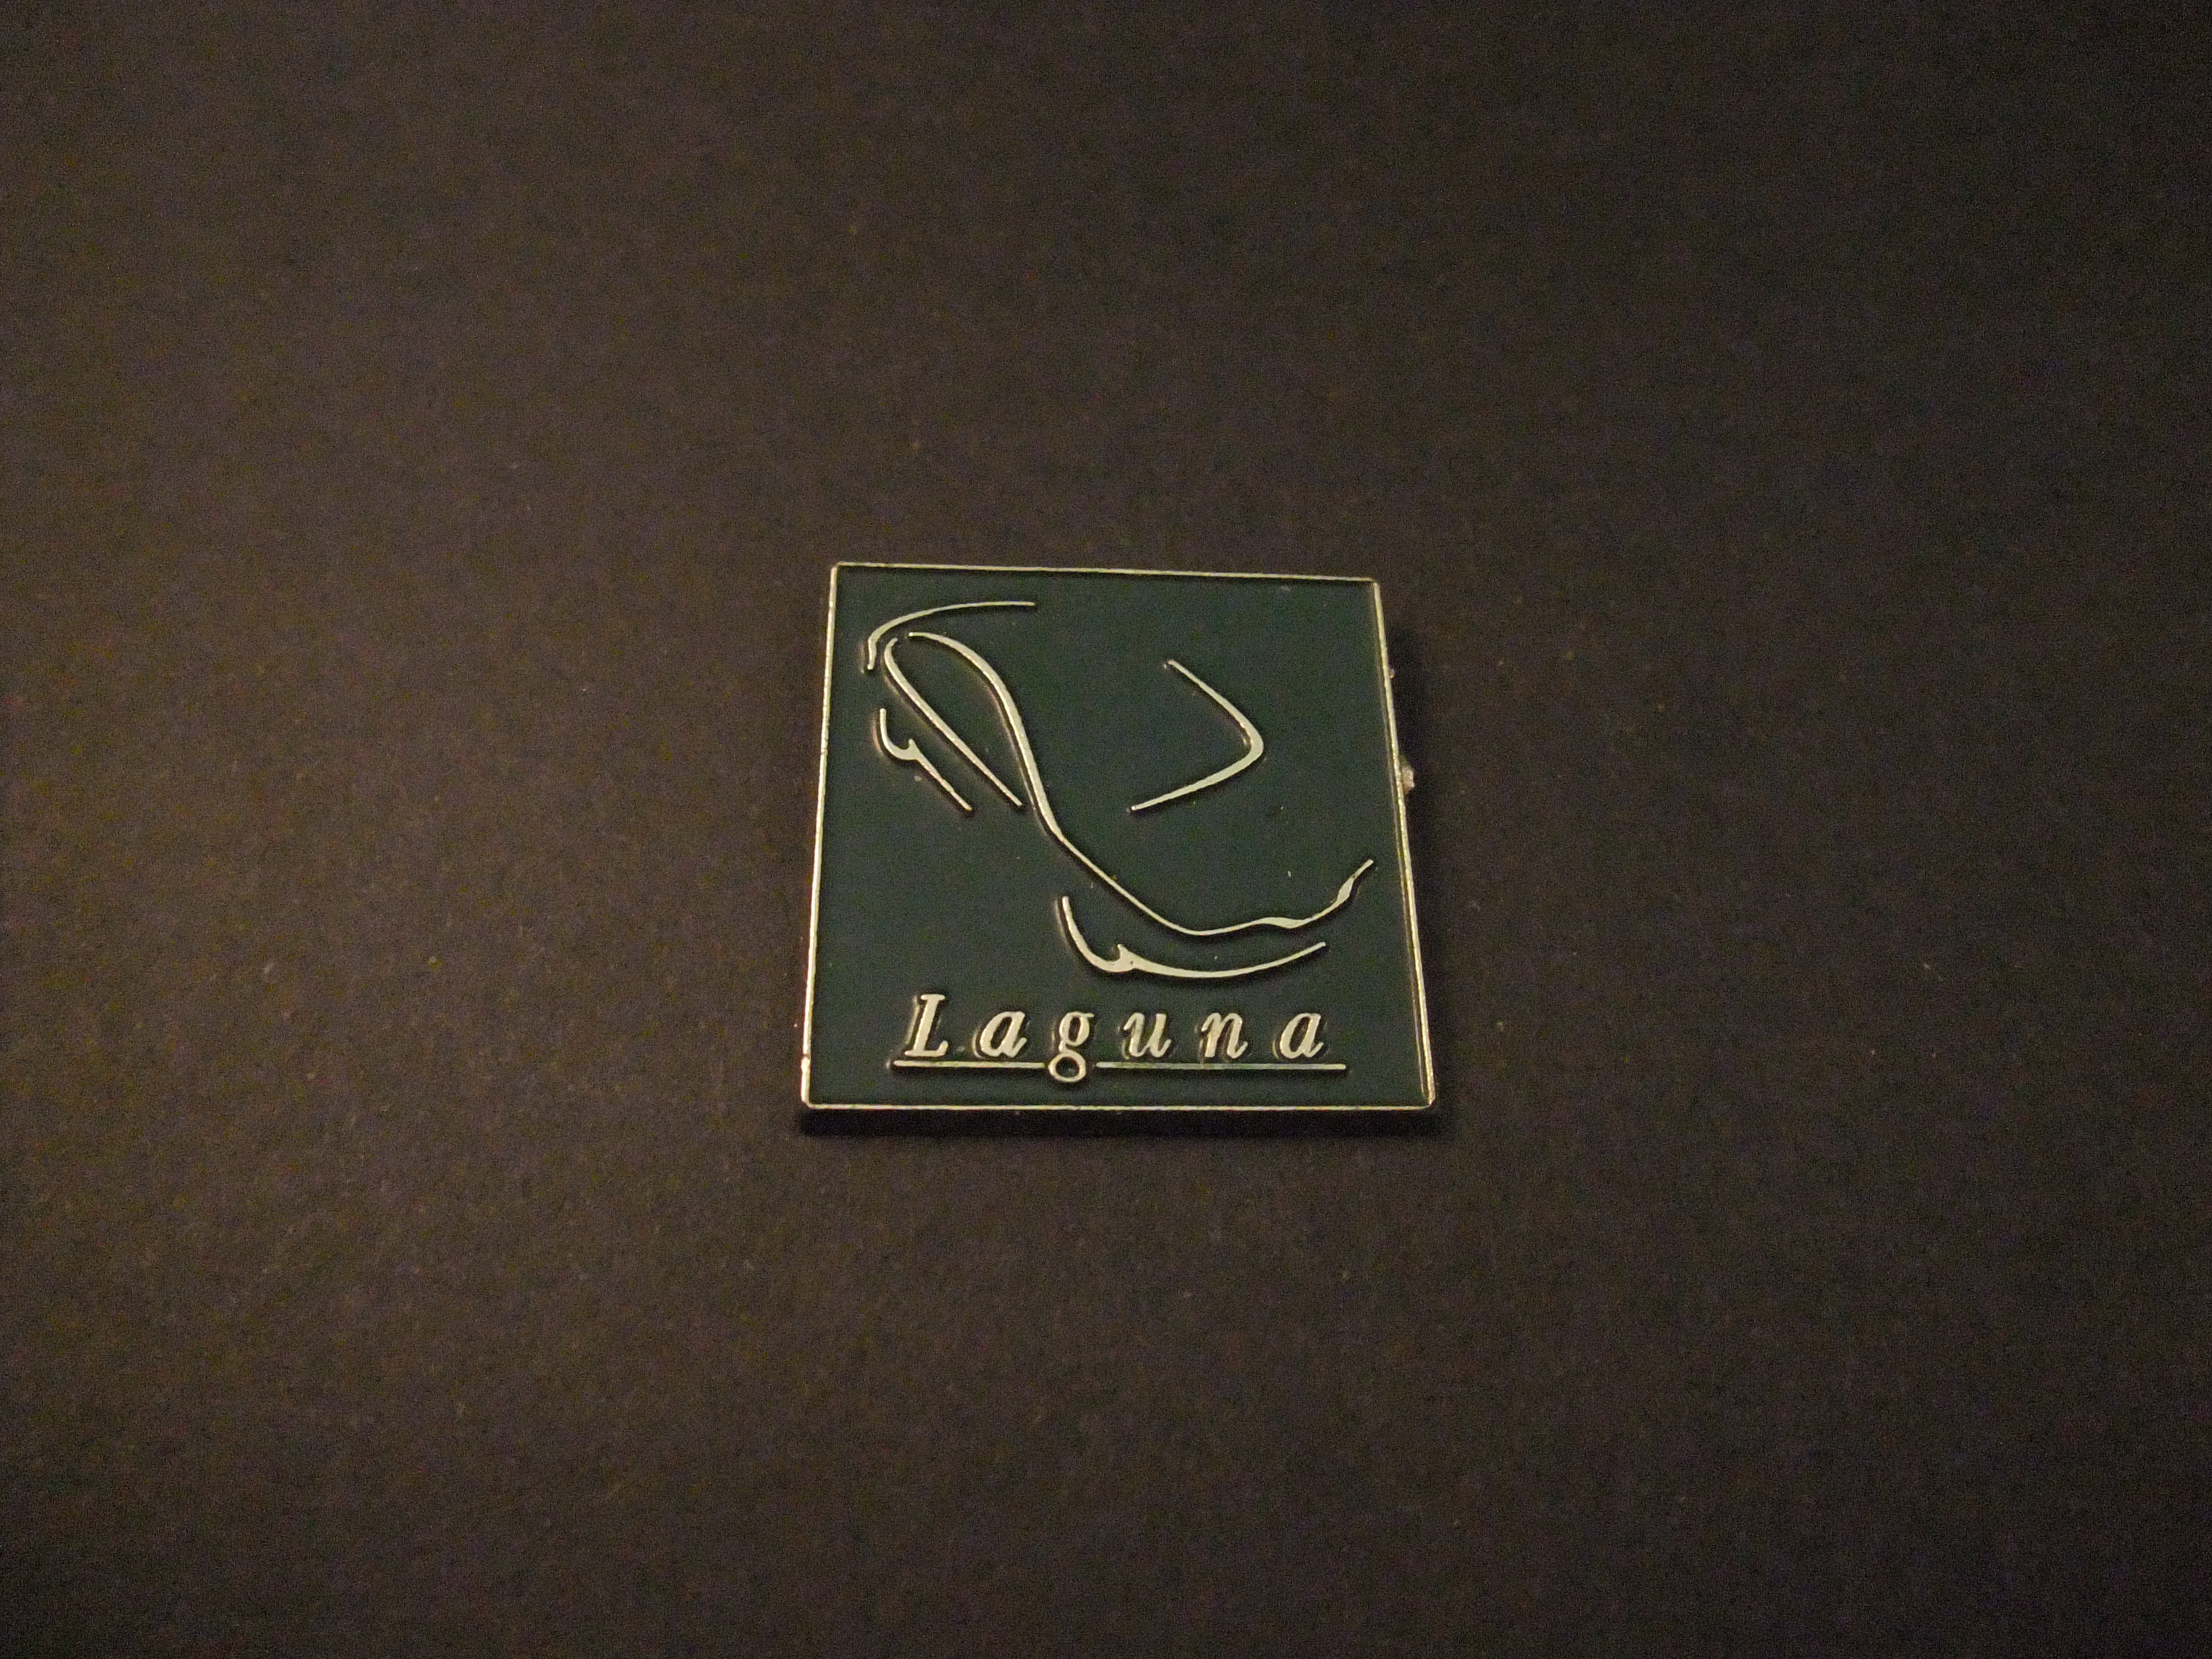 Renault Laguna (comfortabele middenklasse auto) logo